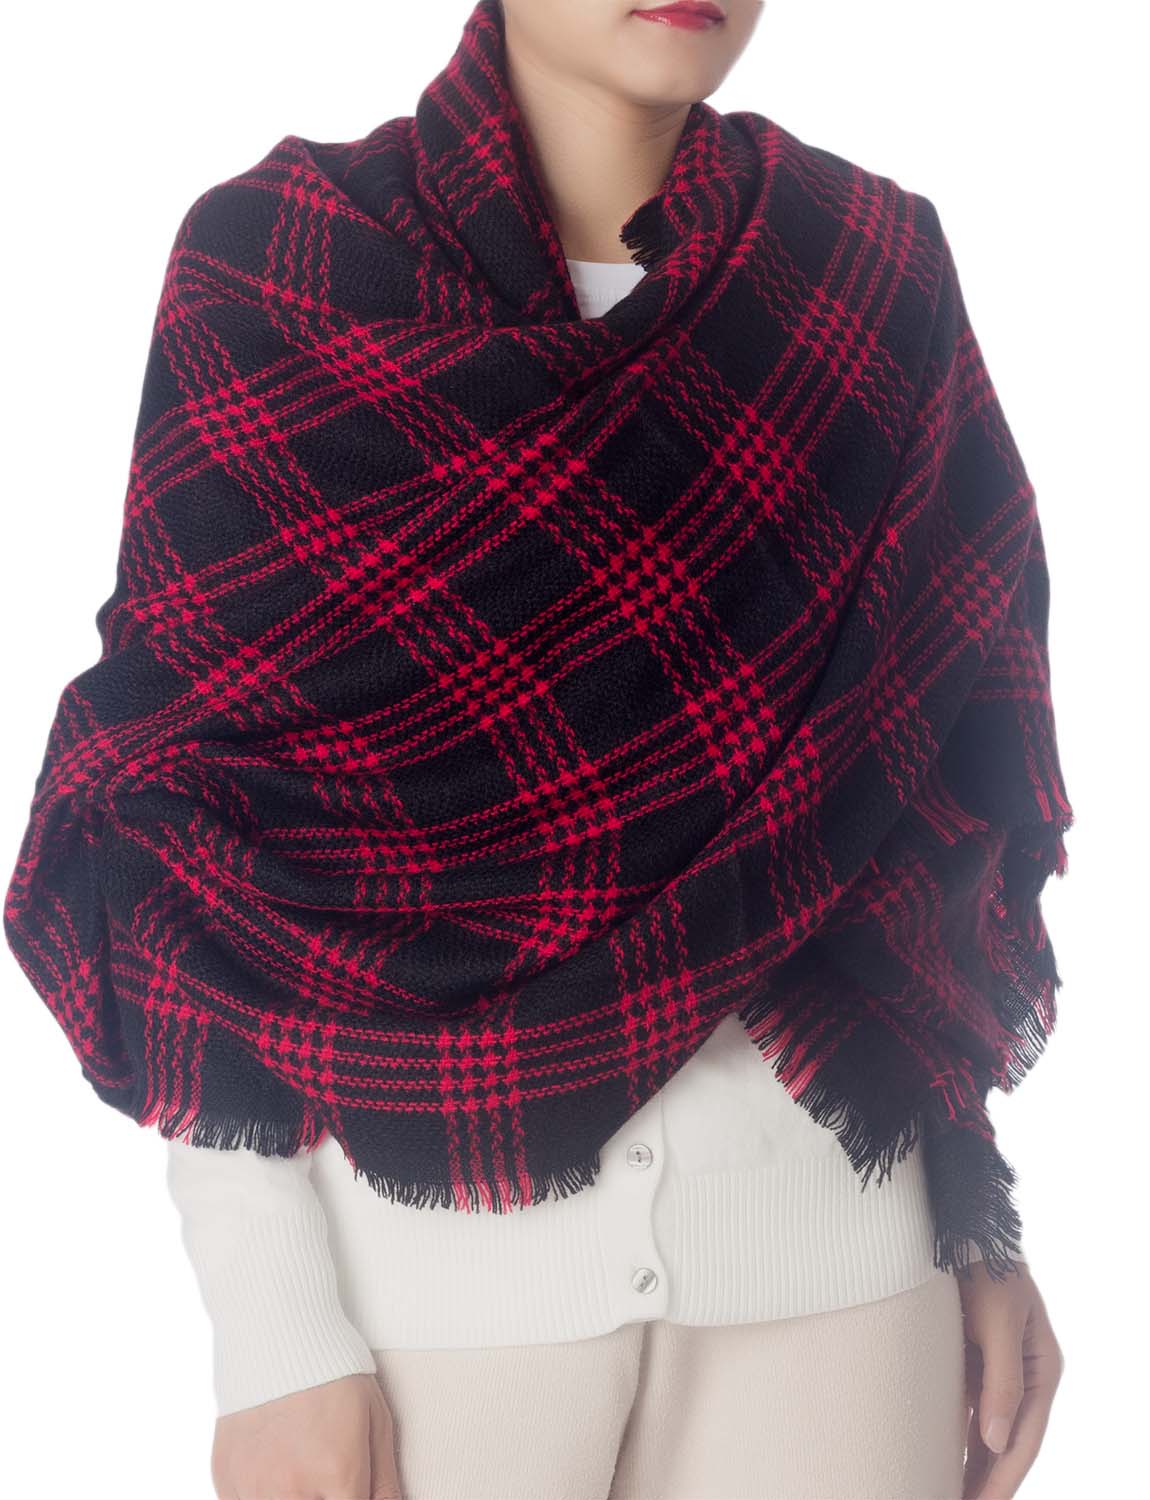 Women's Warm Plaid Blanket Scarves Female Large Tartan Oversized Big Wraps